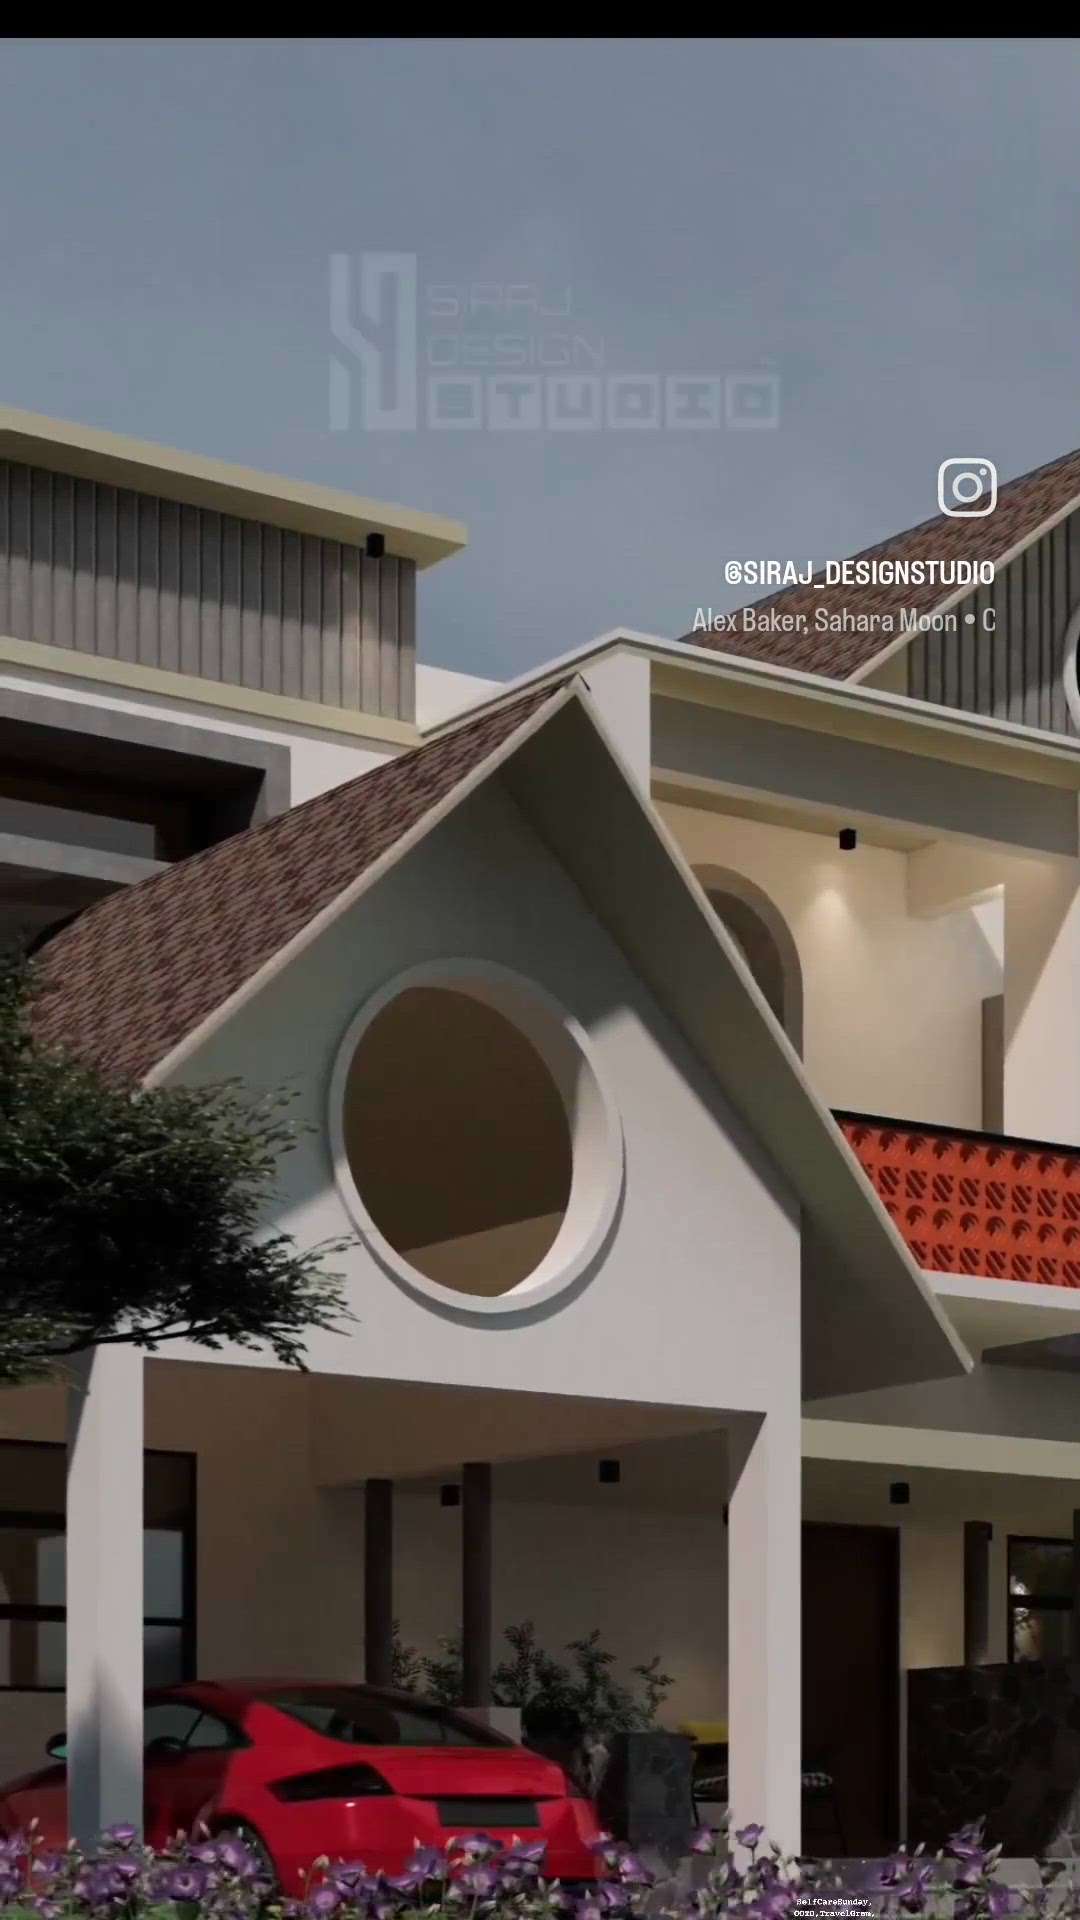 Home exterior animation✨.

#exteriors #ElevationHome #ContemporaryHouse #slopedroof #sirajdesignstudio #3d #ElevationDesign #animation #koloapp #koloviral